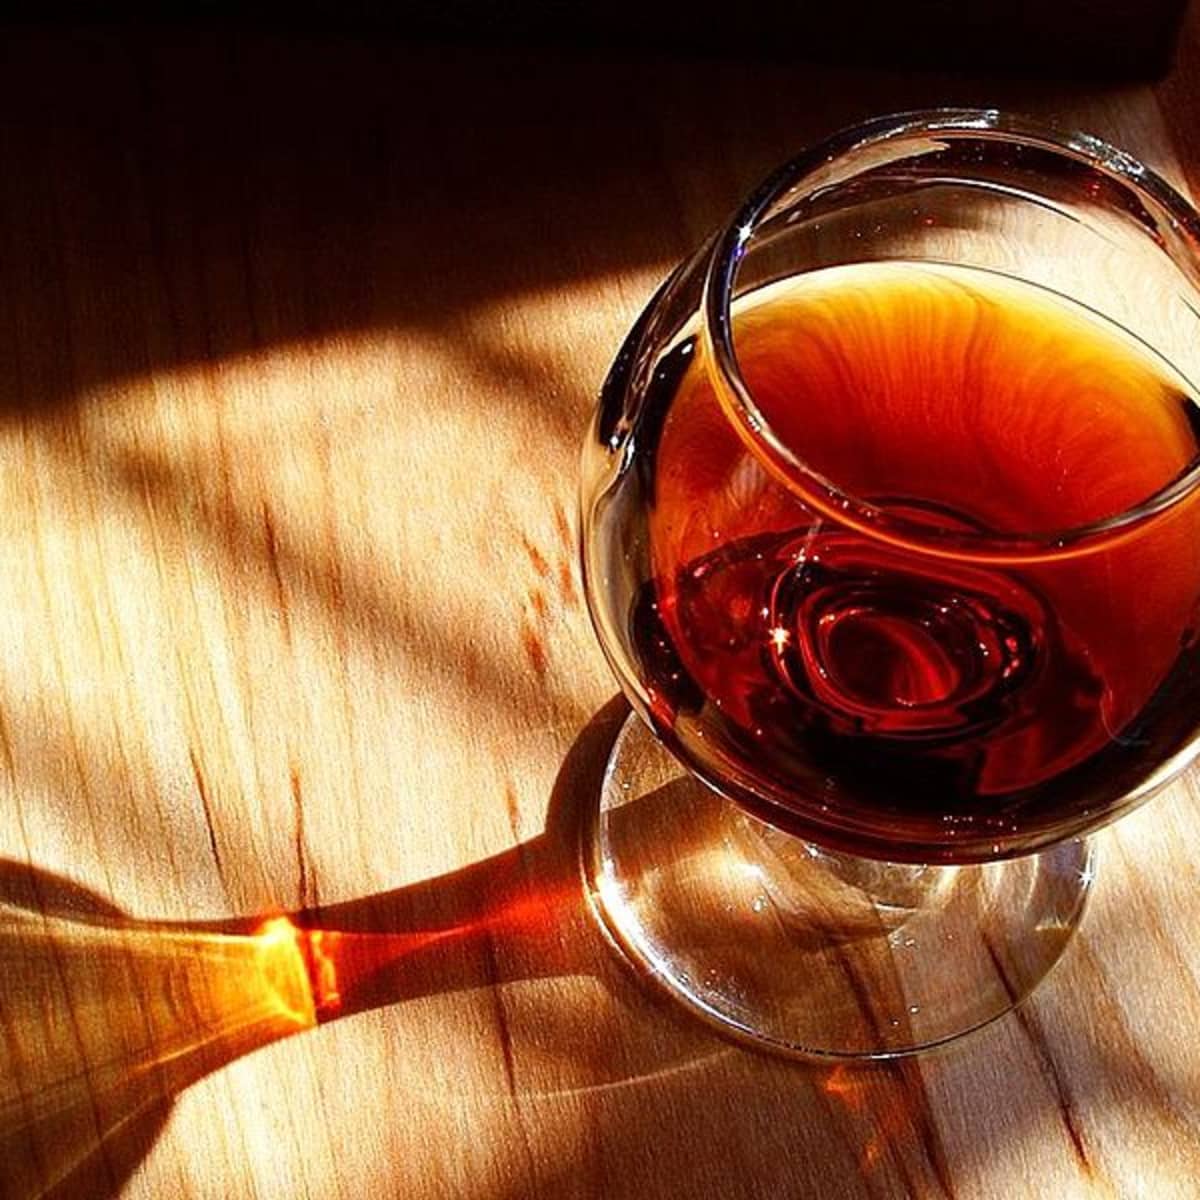 How to Wine Taste Properly